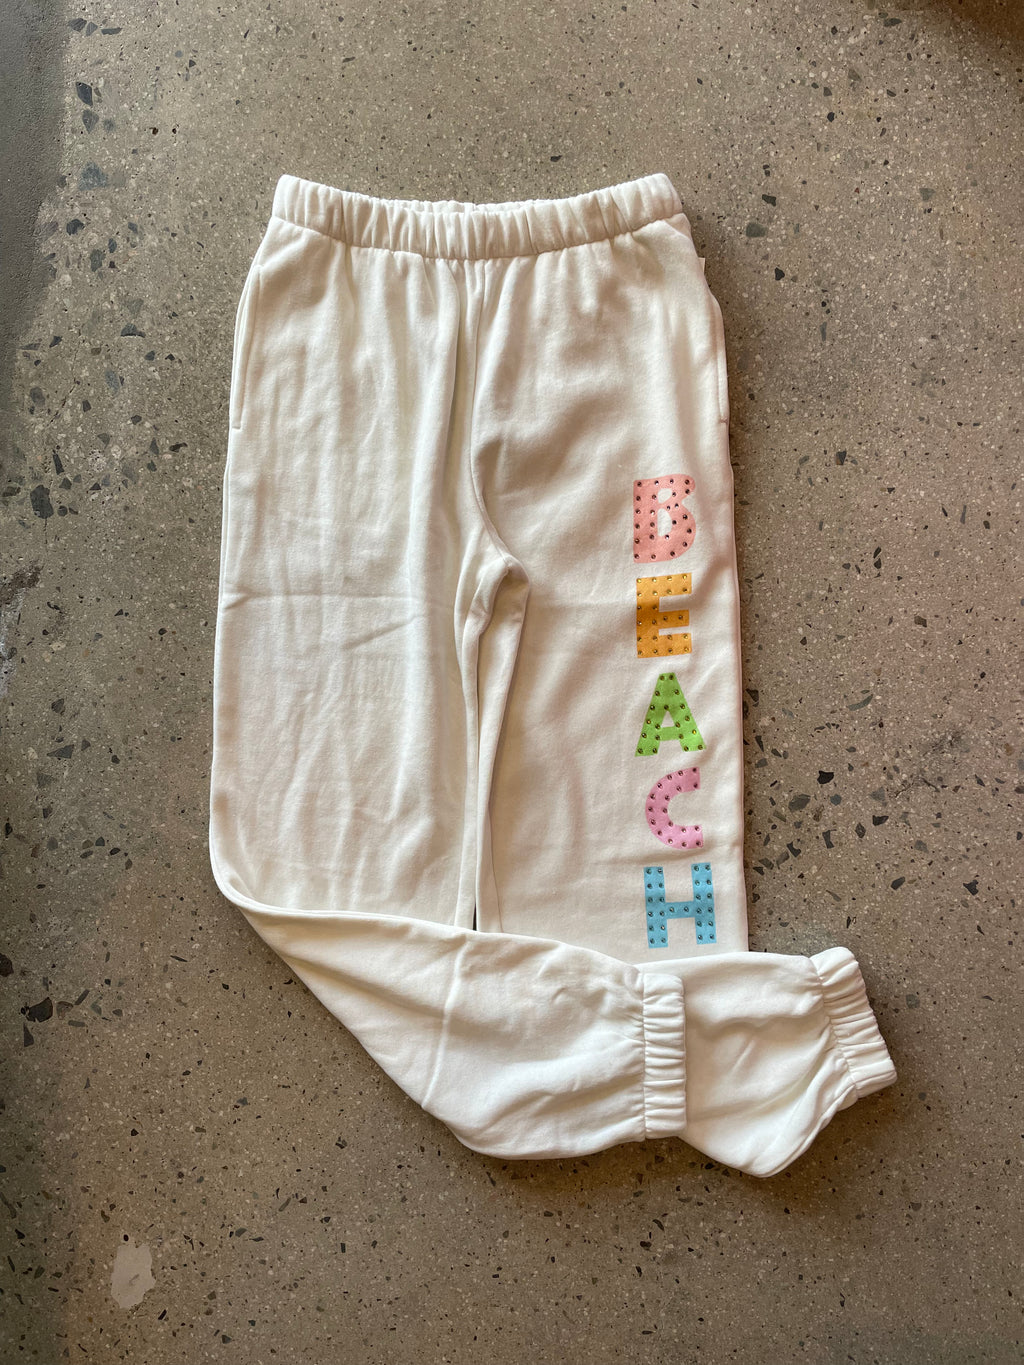 Women's Rhinestone BEACH Fleece Pant WARM WHITE